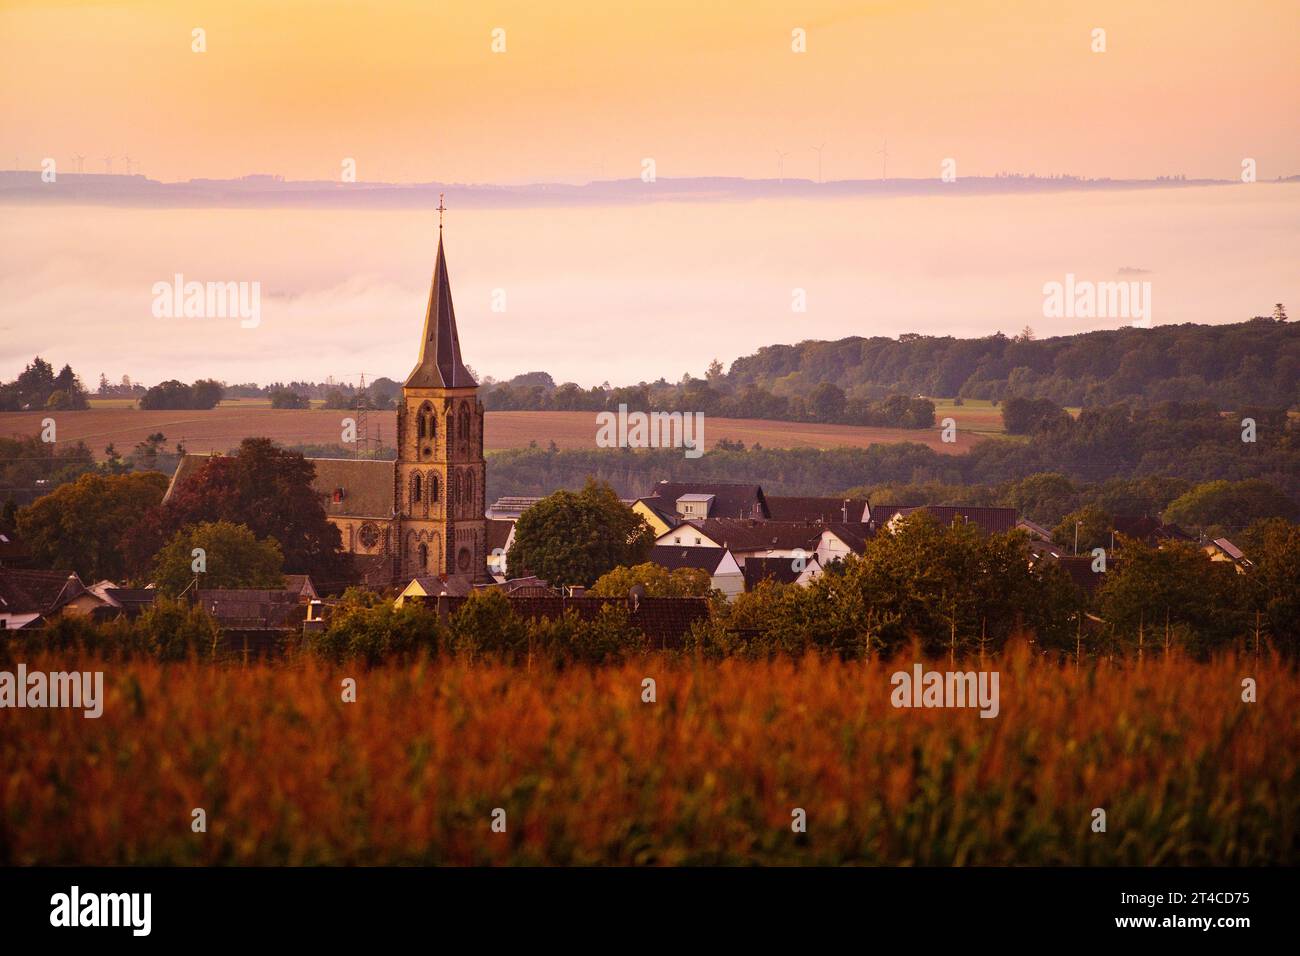 field landscape with Landkern parish and St. Servatius church at dawn, Germany, Rhineland-Palatinate, Landkern Stock Photo